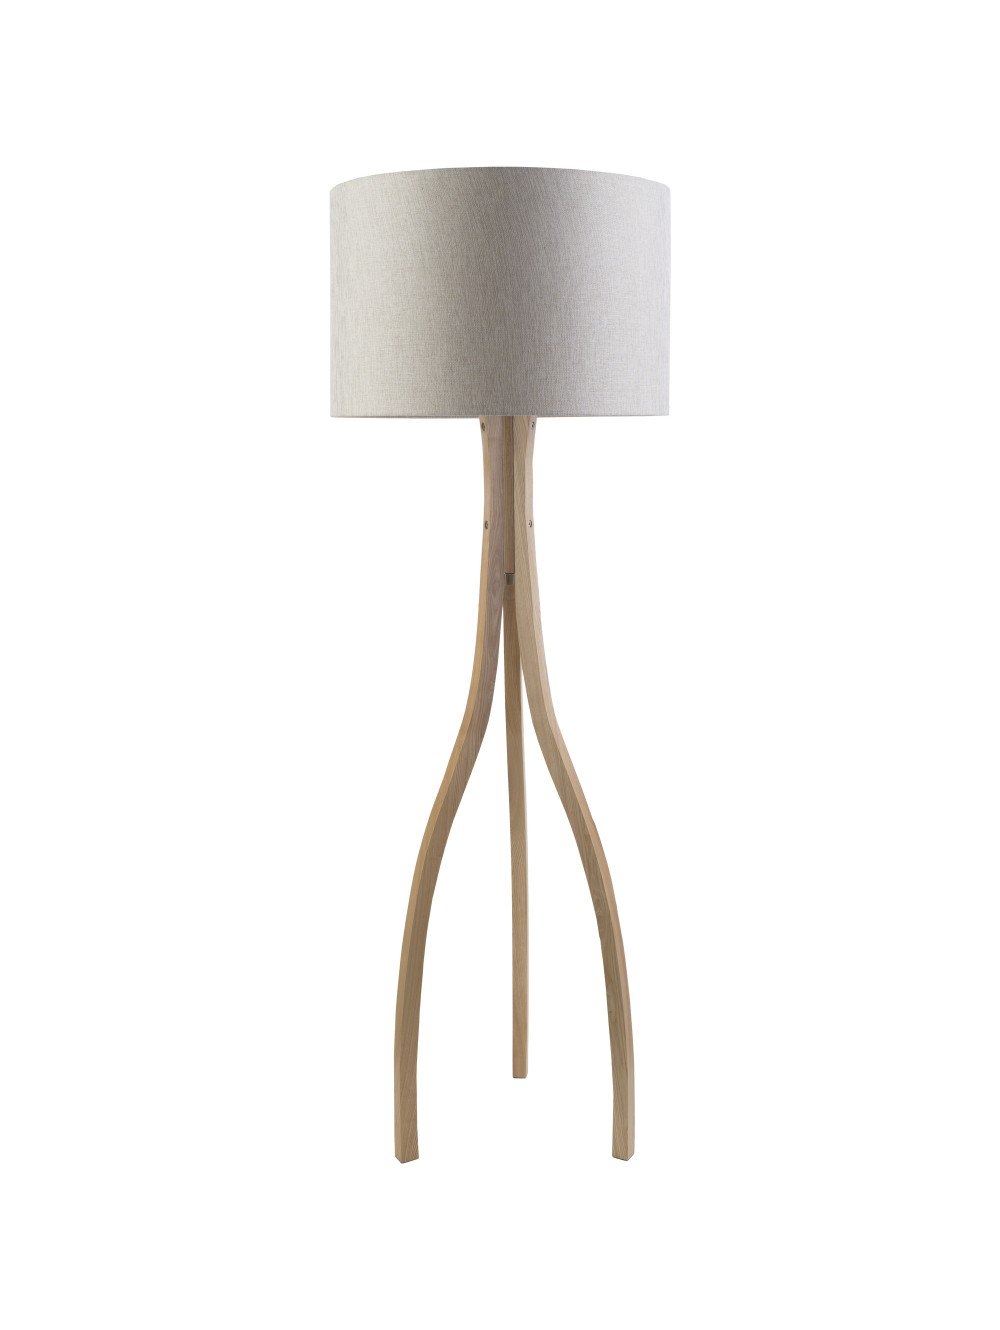 LEWIS WISHBONE FLOOR LAMP - Image 0